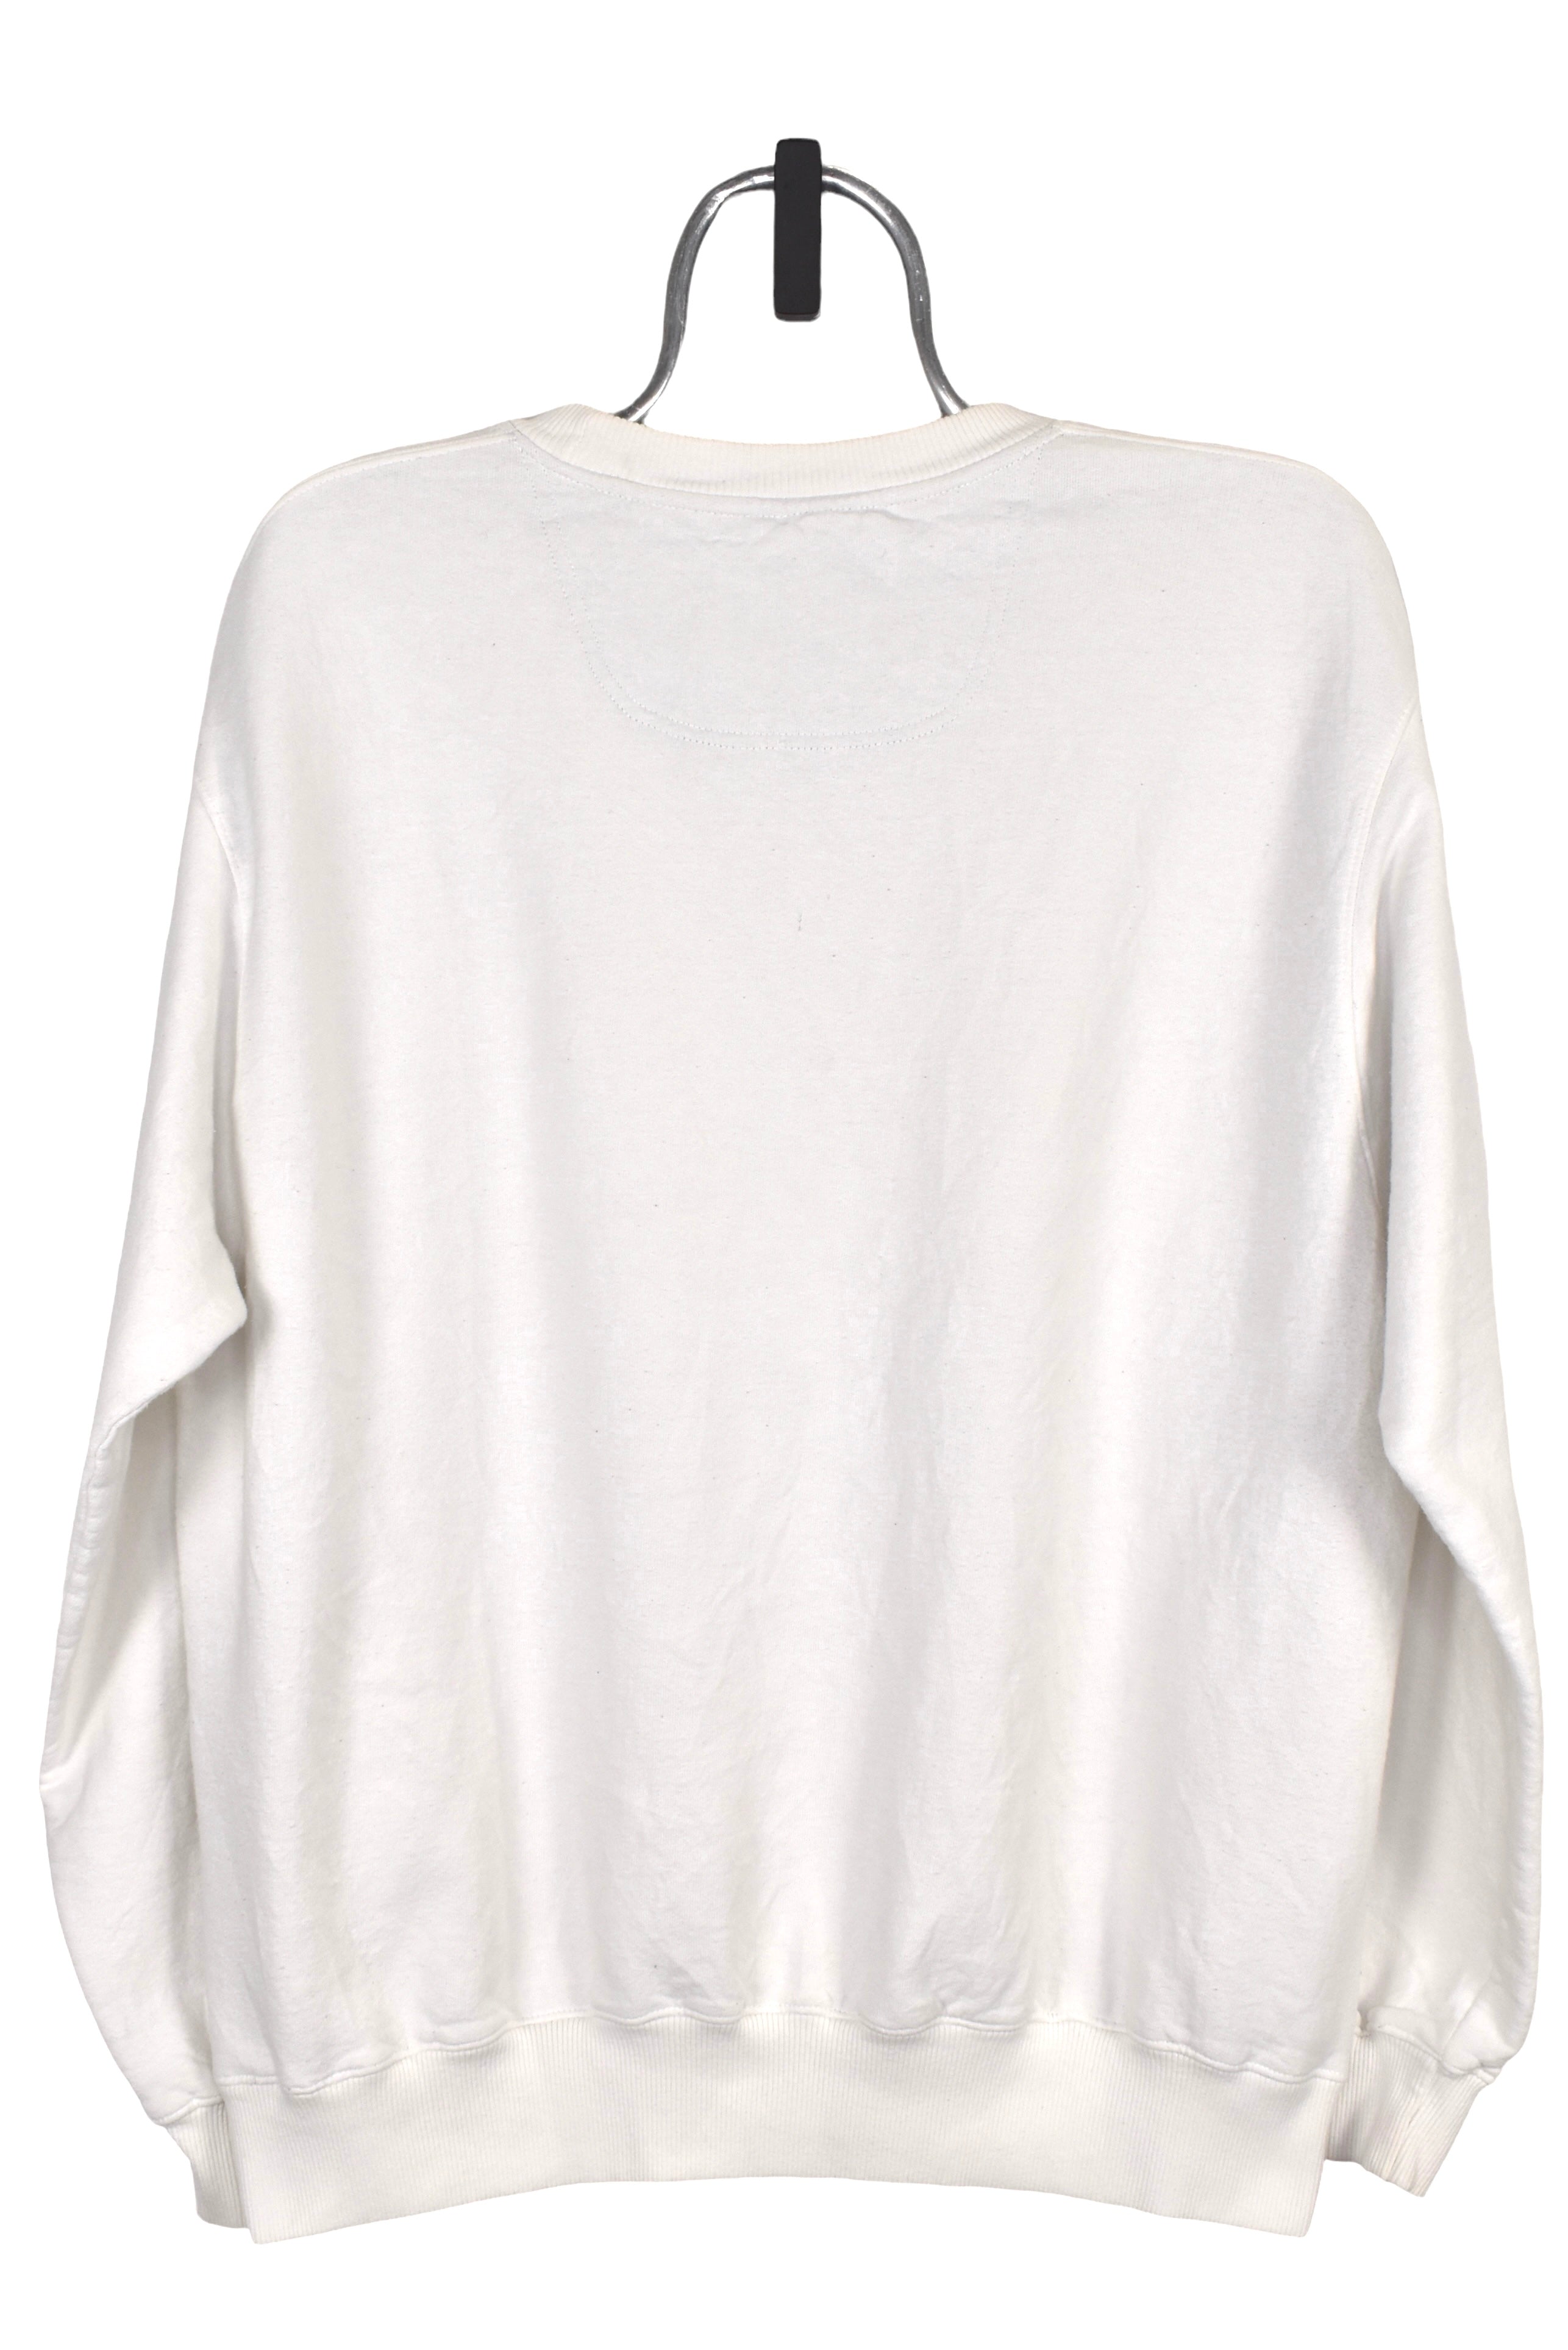 Modern Champion sweatshirt (L), white embroidered crewneck